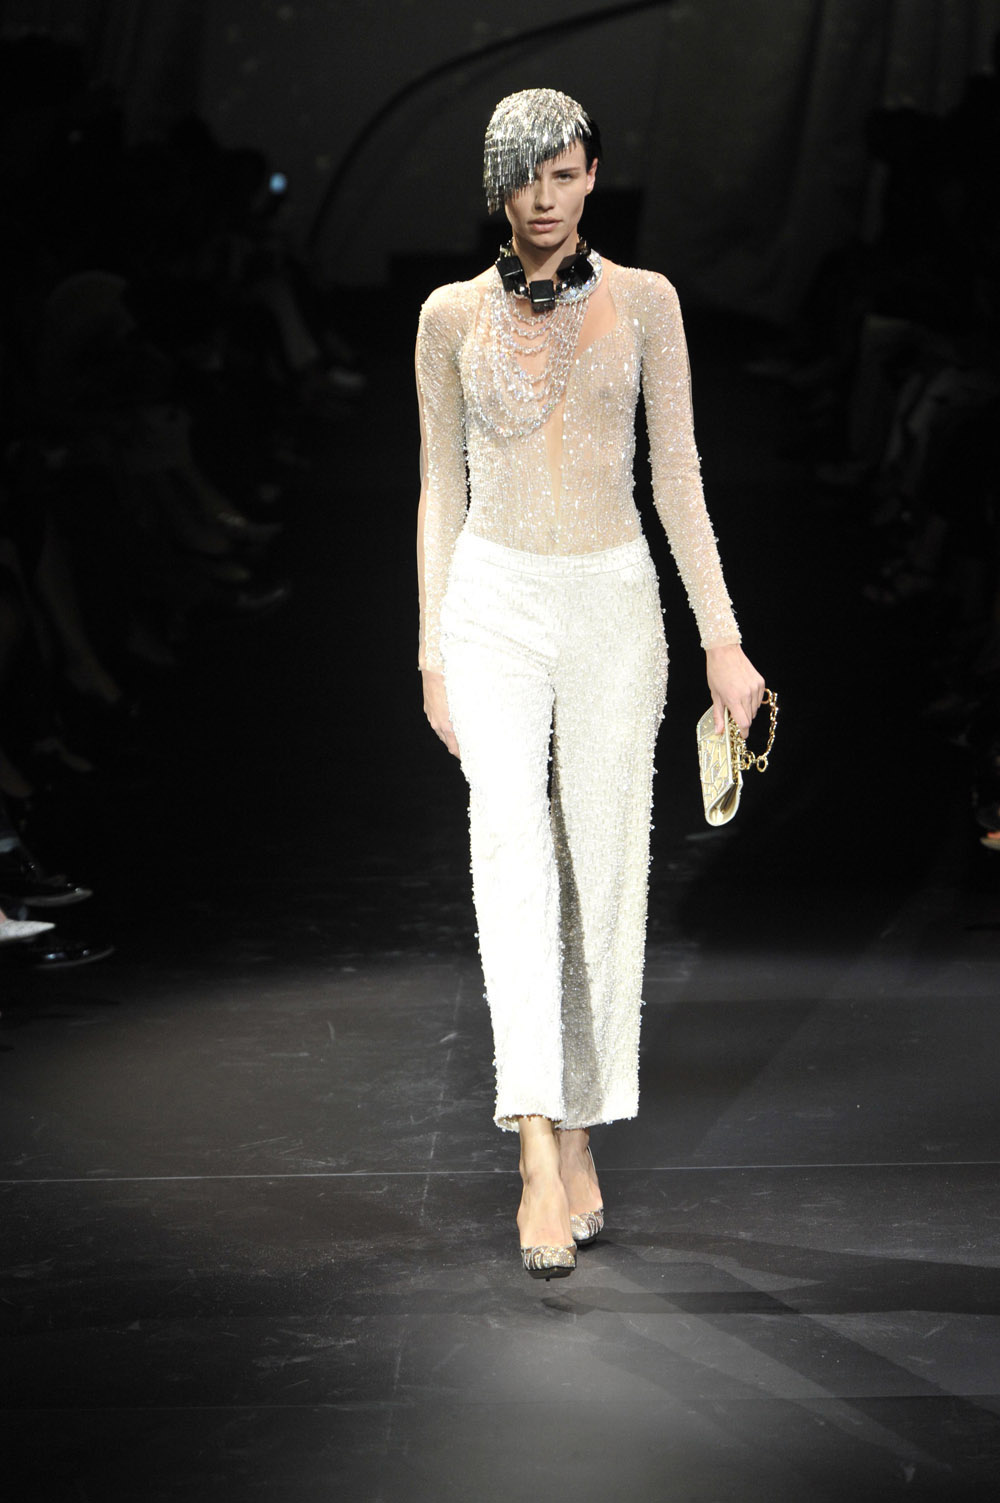 Giorgio Armani Prive Haute Couture Fall 2009: The Lady Wears the Pants